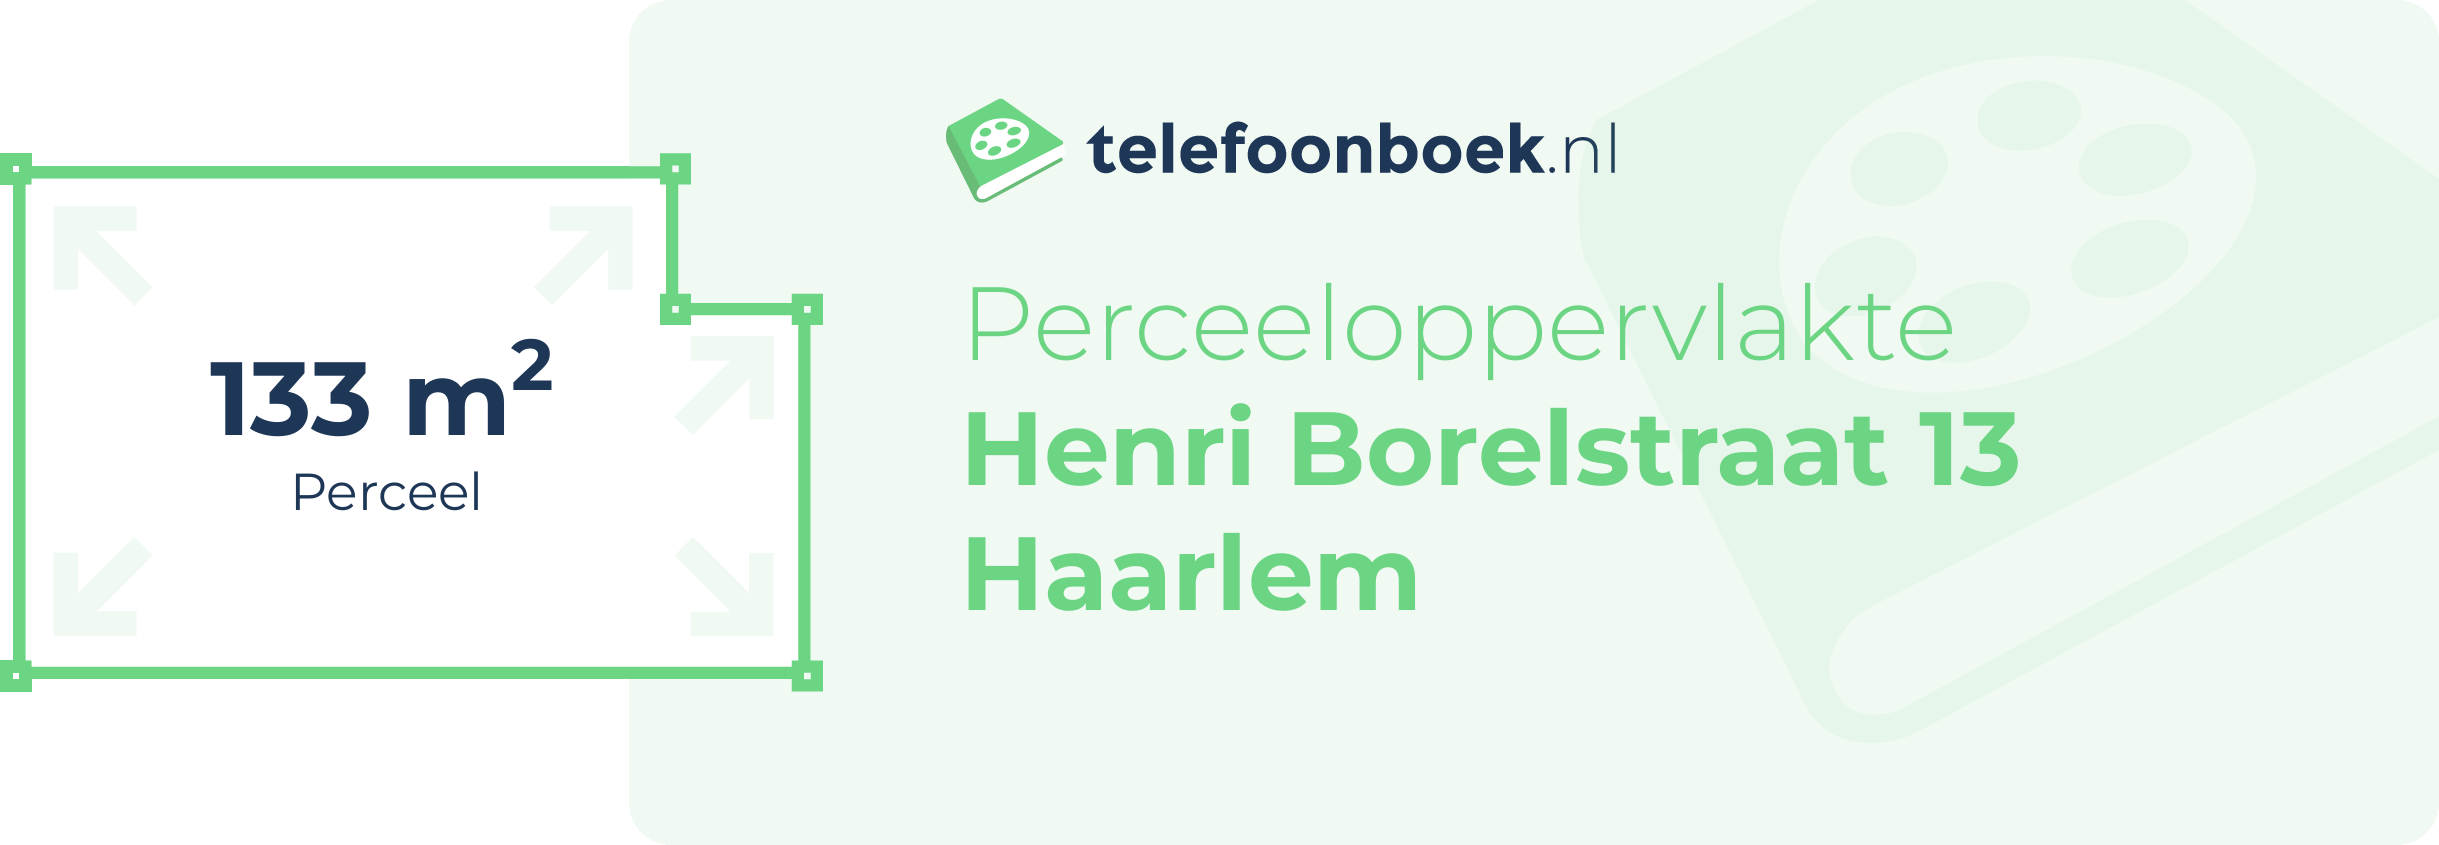 Perceeloppervlakte Henri Borelstraat 13 Haarlem